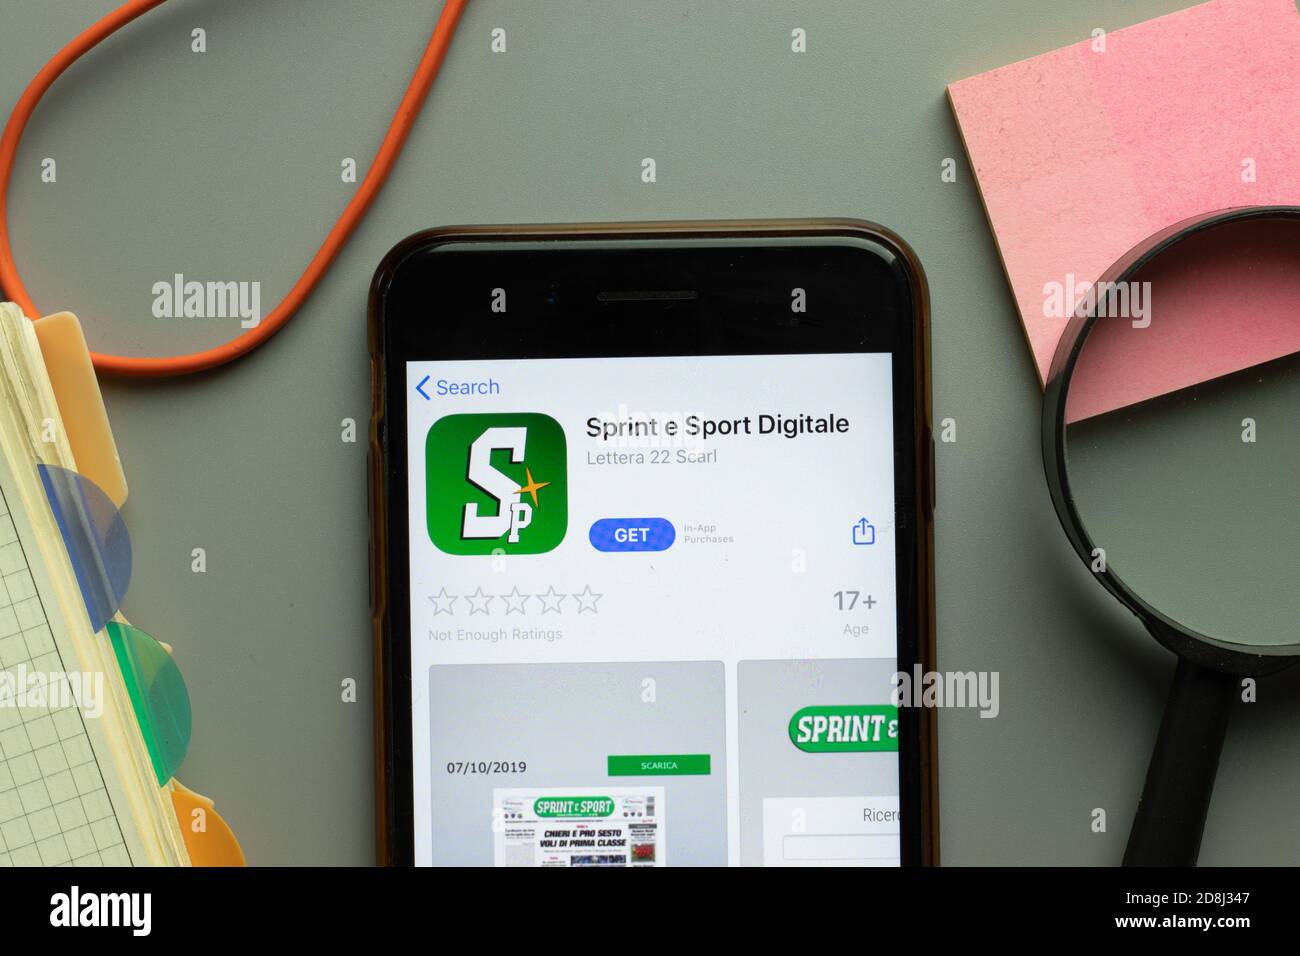 New York, USA - 26 October 2020: Sprint e Sport Digitale mobile app logo on phone screen close up, Illustrative Editorial Stock Photo